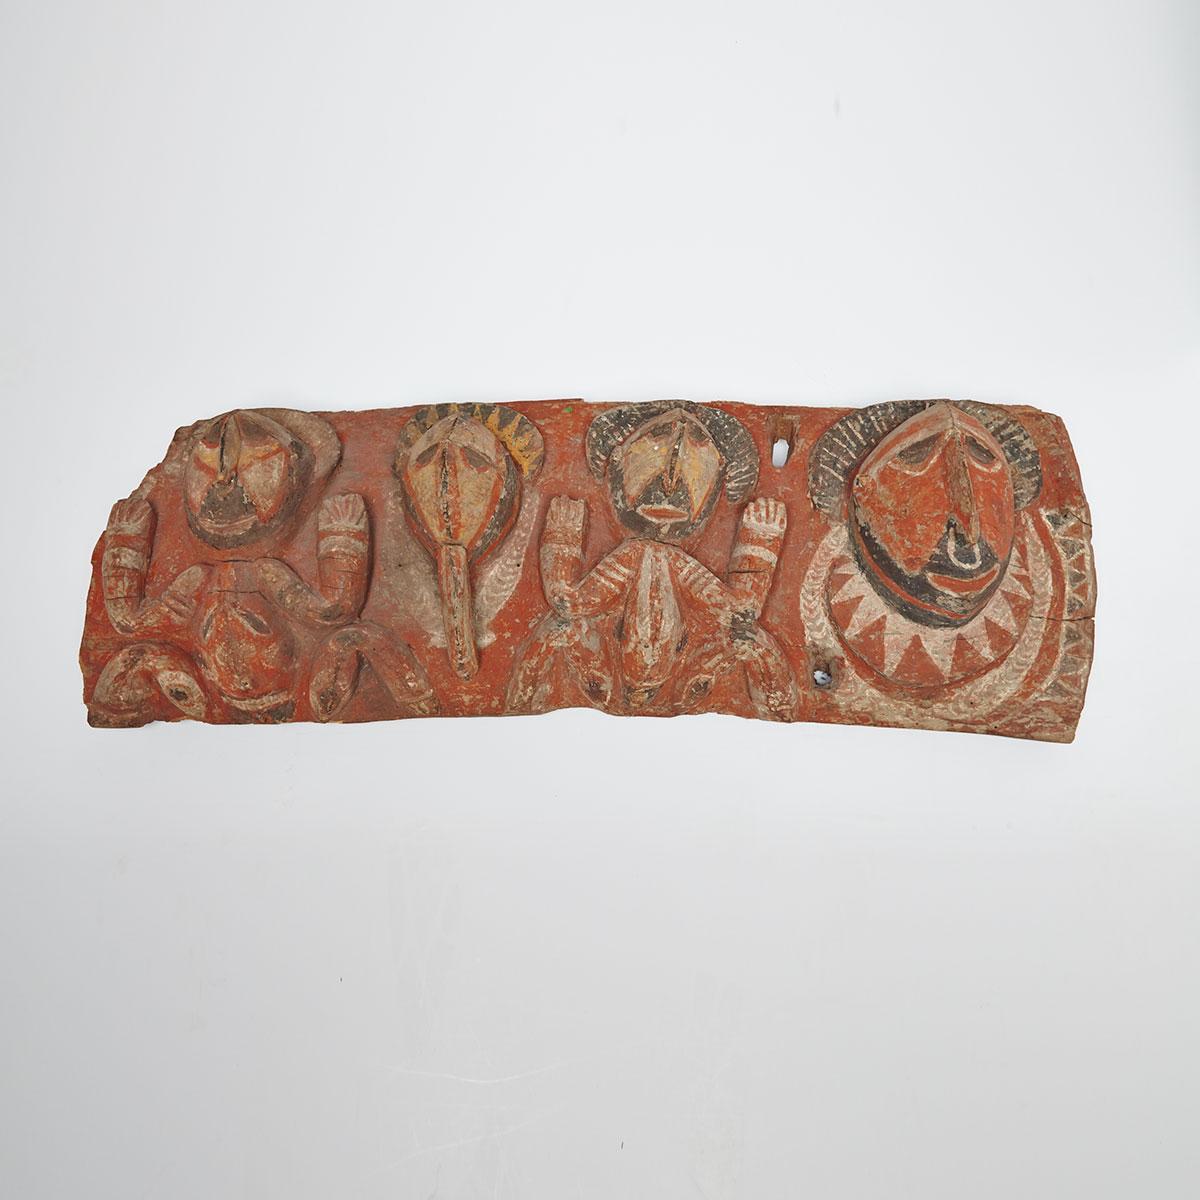 Papua New Guinea Maprik River Abelam Haus Tambaran Large Fragment, 20th century